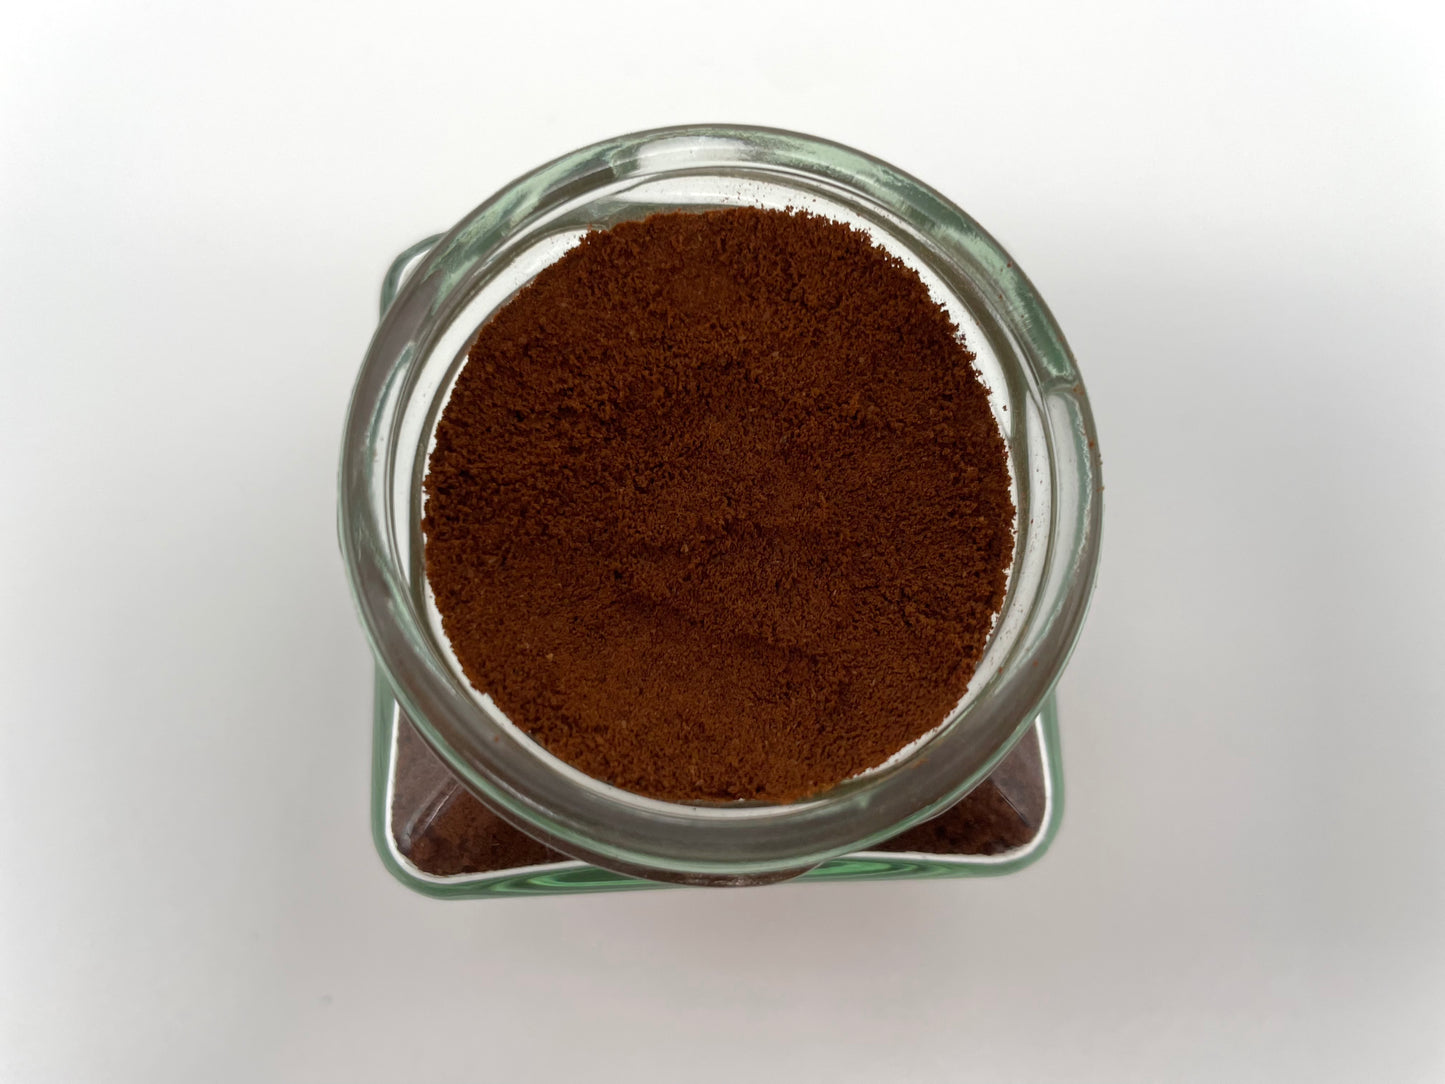 Esmeralda iGUANA Coffee - Filter 250g